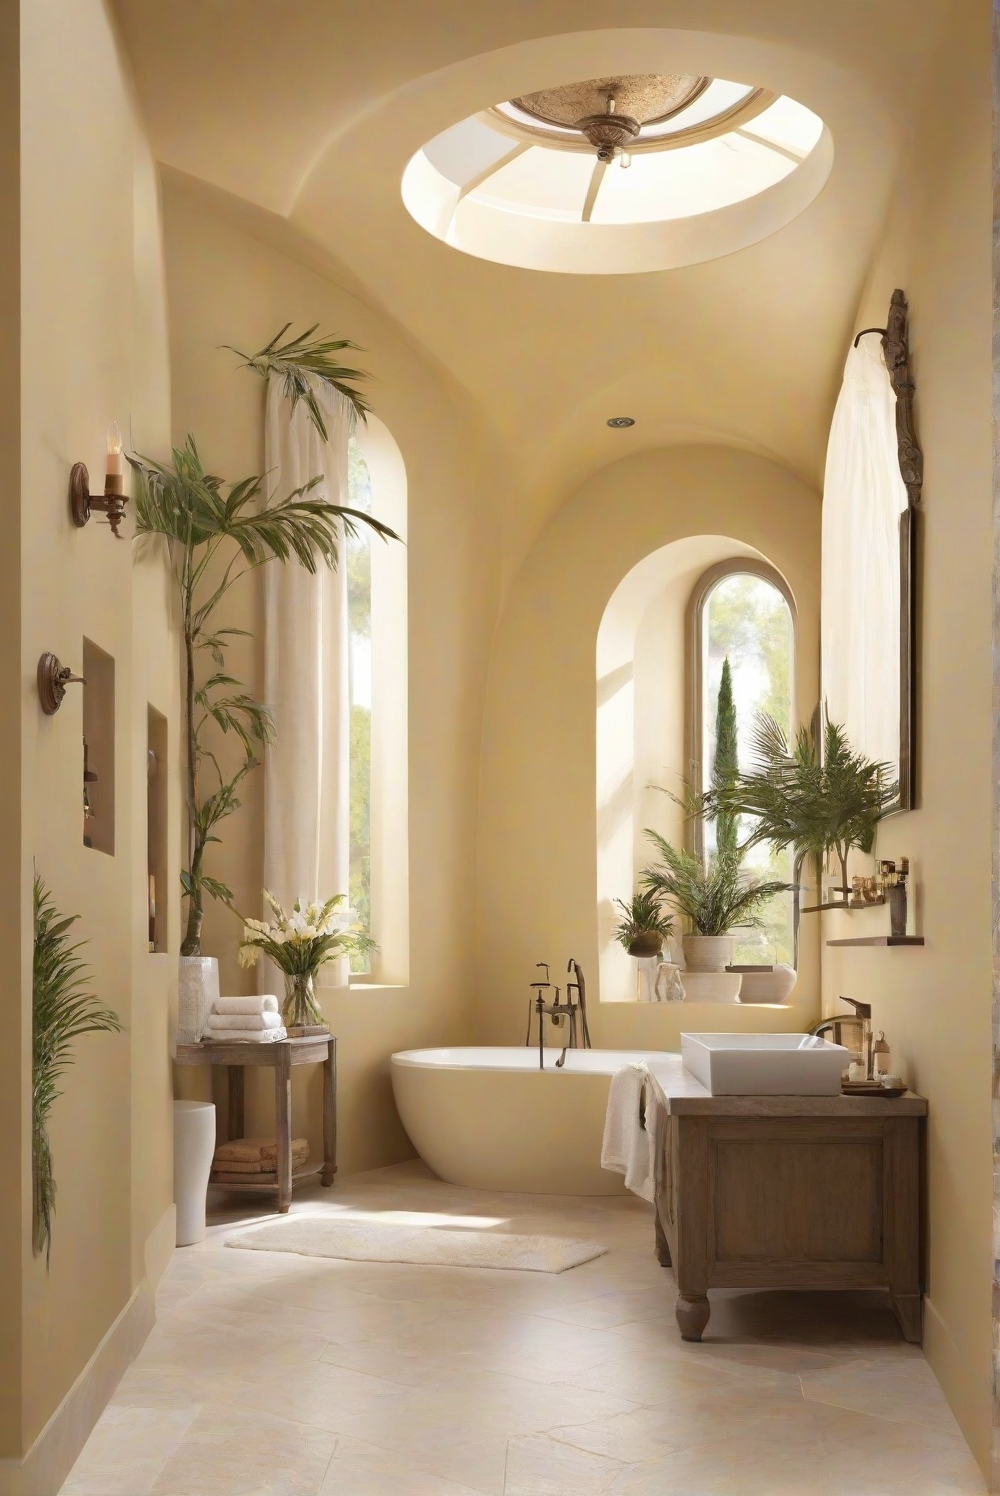 Tuscan Sun Serenade, bathroom design, radiant bliss, bathroom decor, bathroom interior design, luxurious bathroom, spa-inspired bathroom